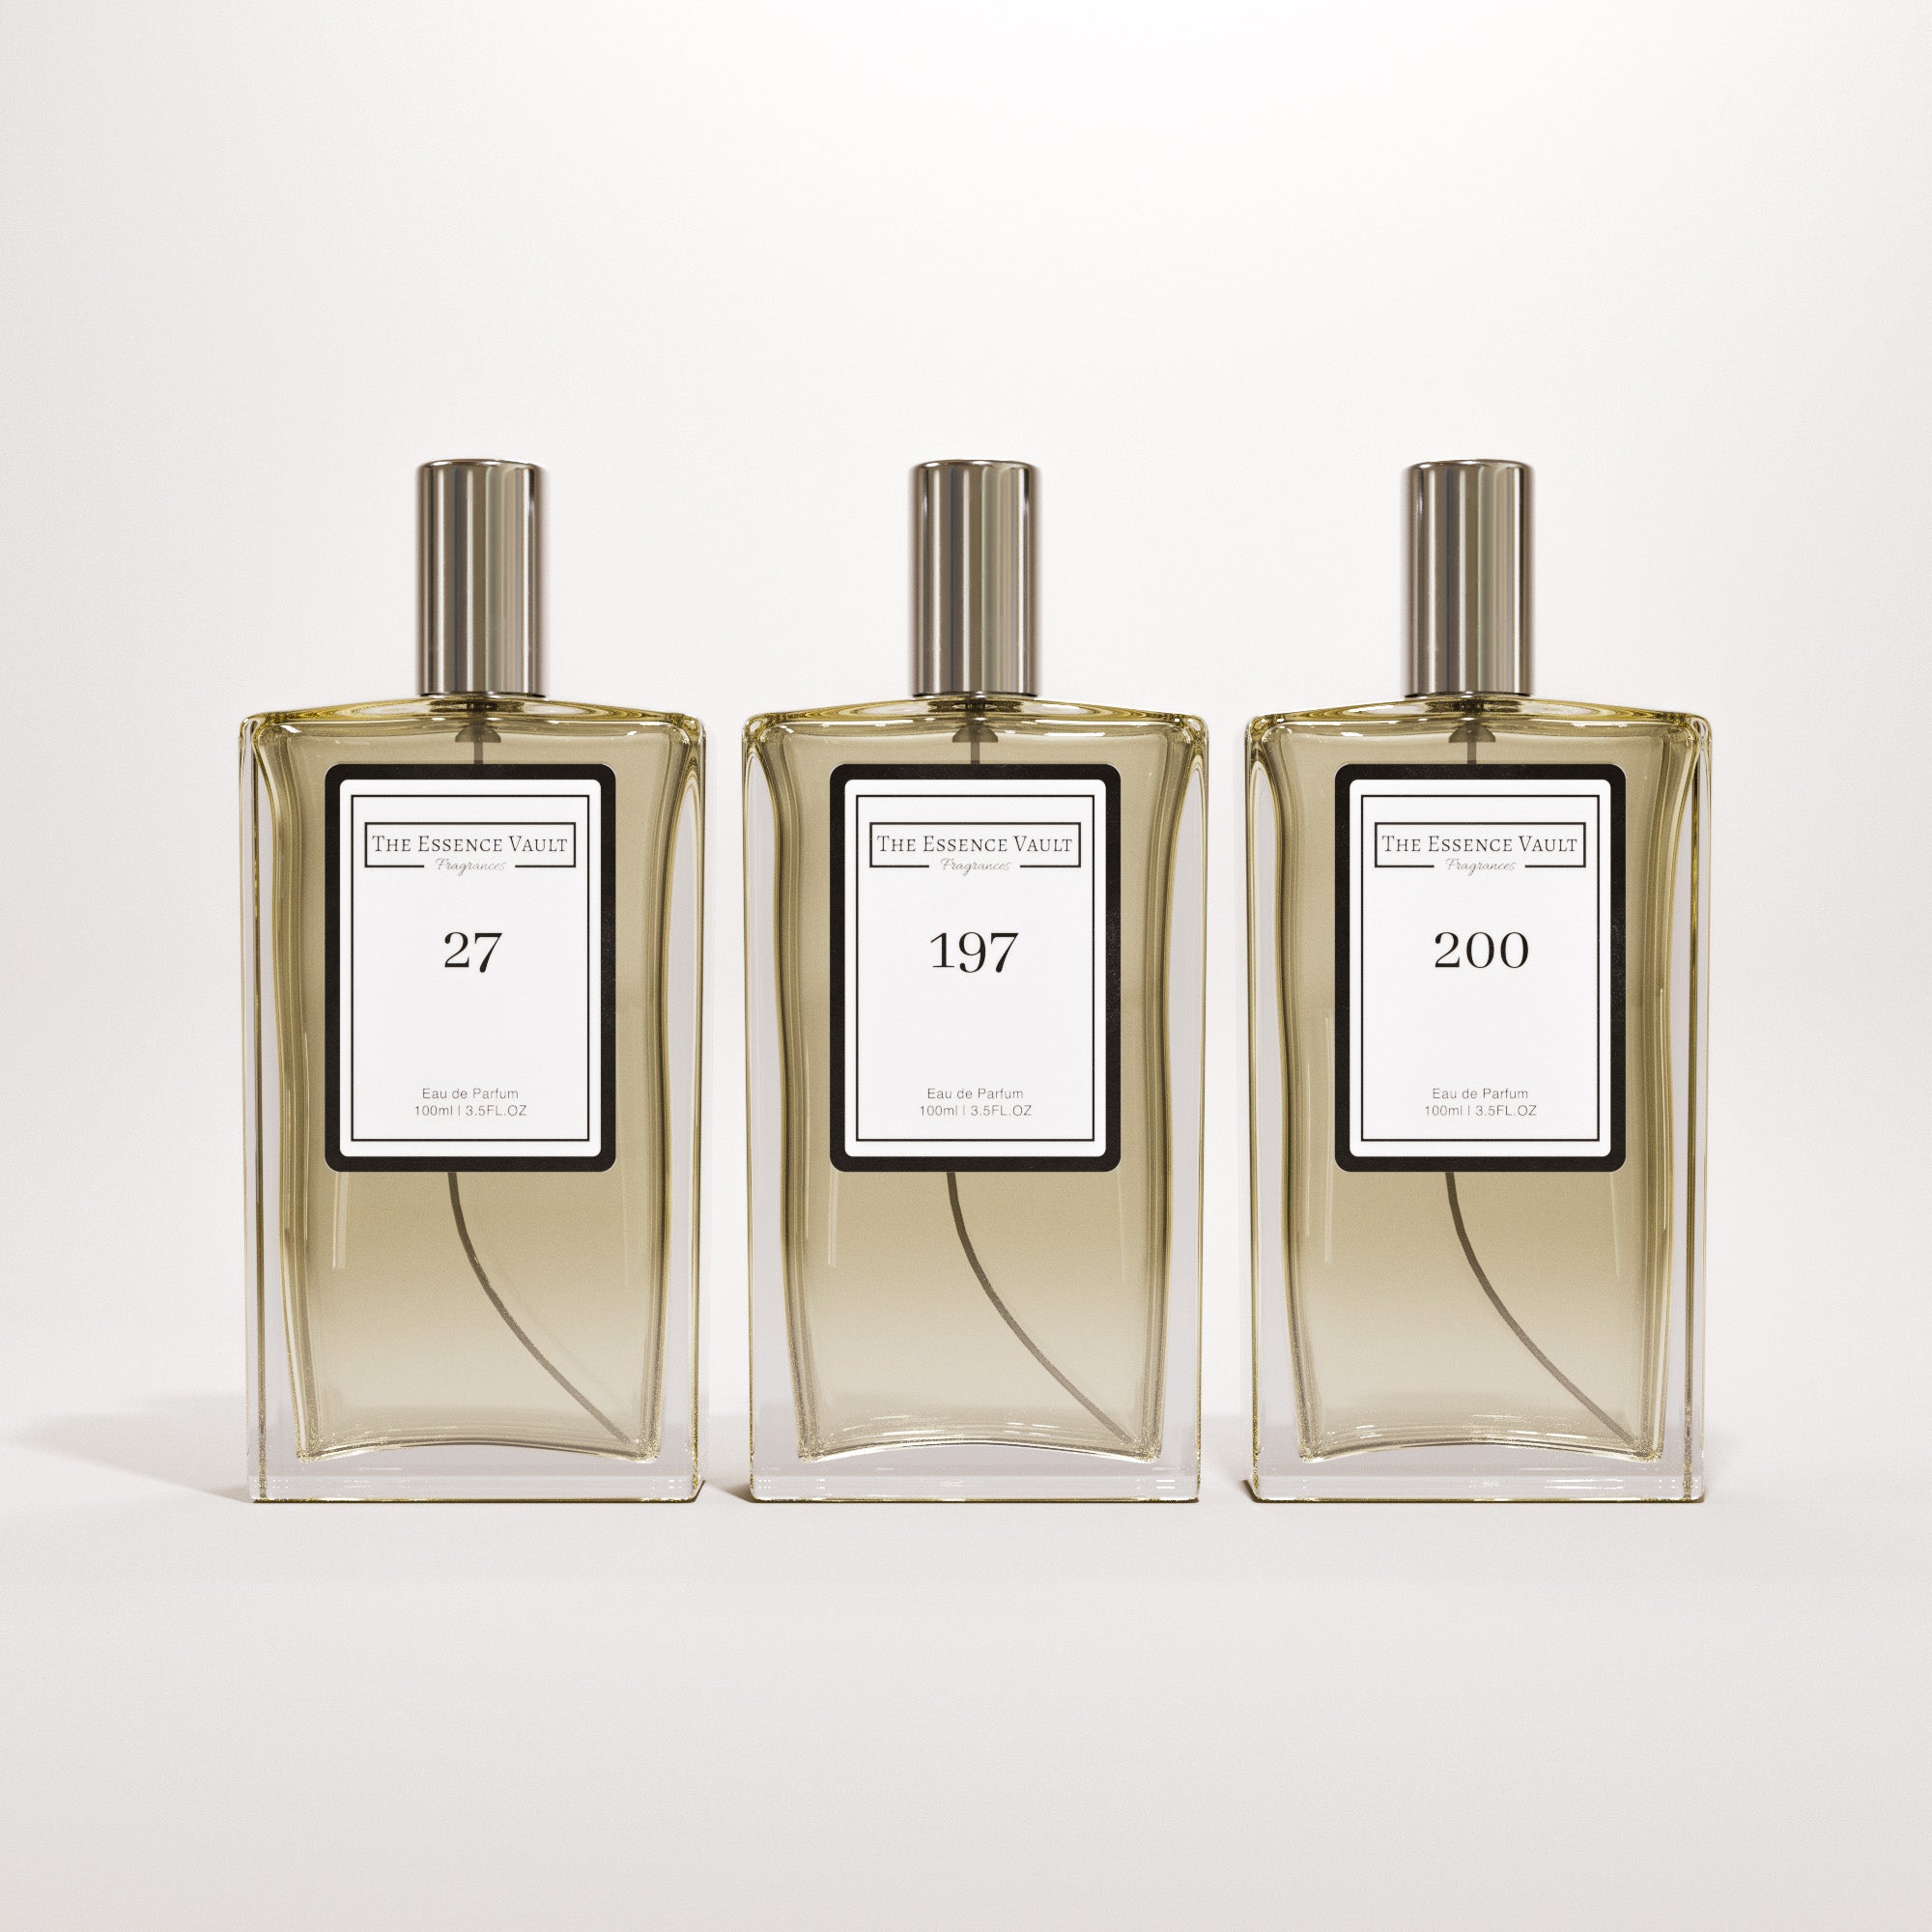 100ml Perfume Gift Set – The Essence Vault